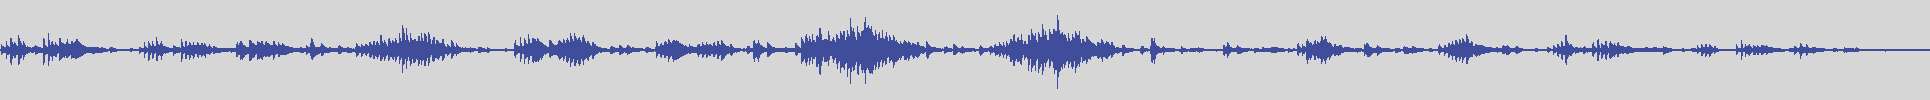 big_music_classic [BMC005] Erik Satie, Corrado Rossi - Gnossienne N.3 [] audio wave form